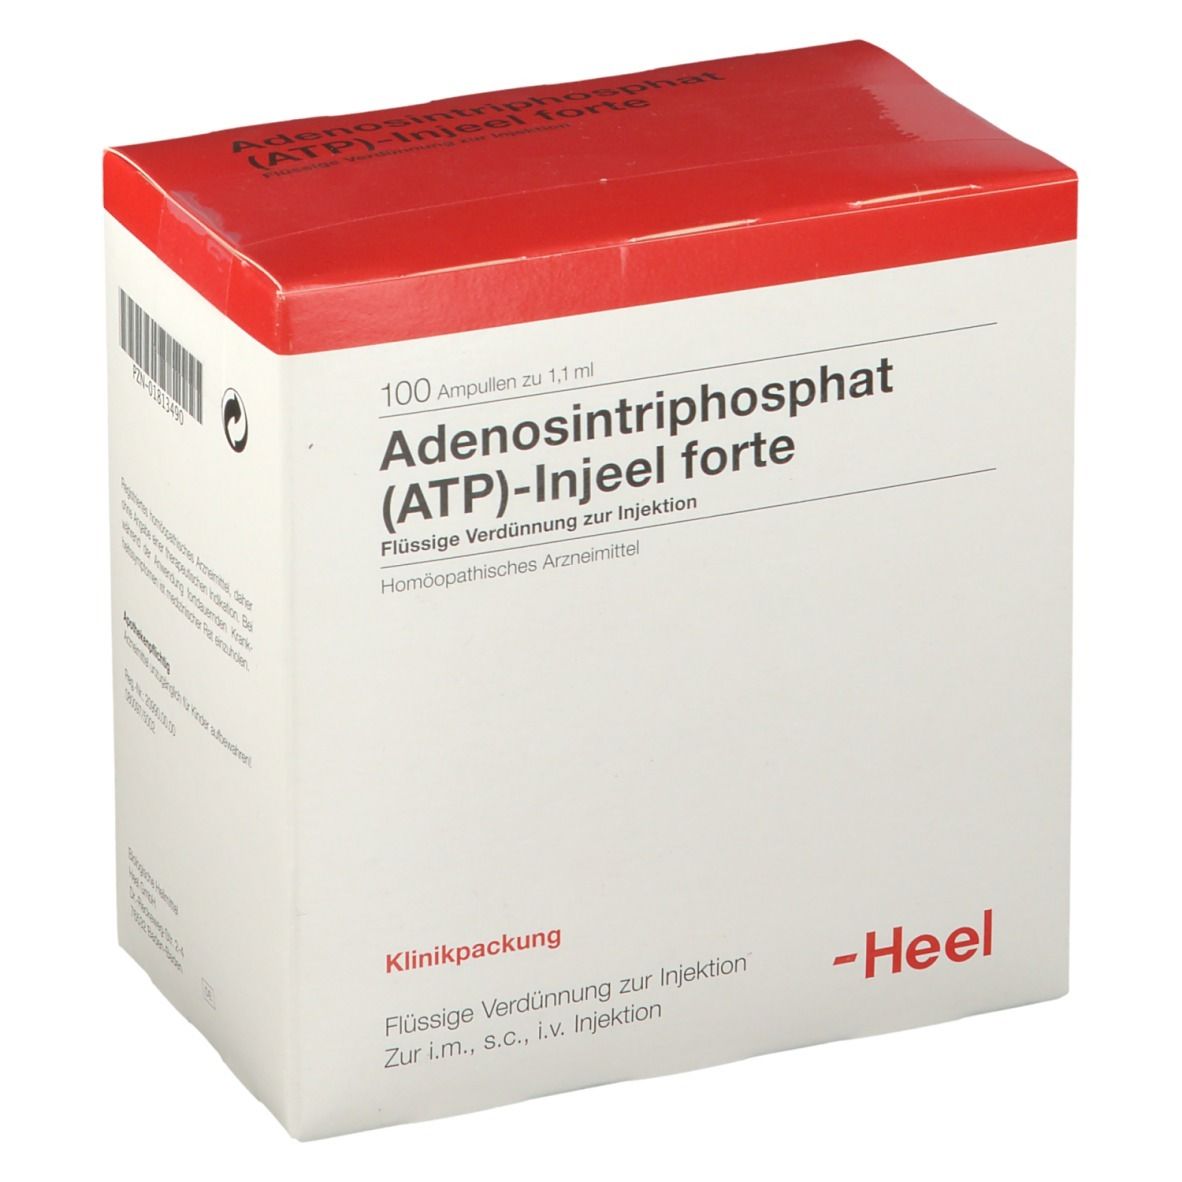 Heel® Adenosintriphosphat ATP-Injeel forte